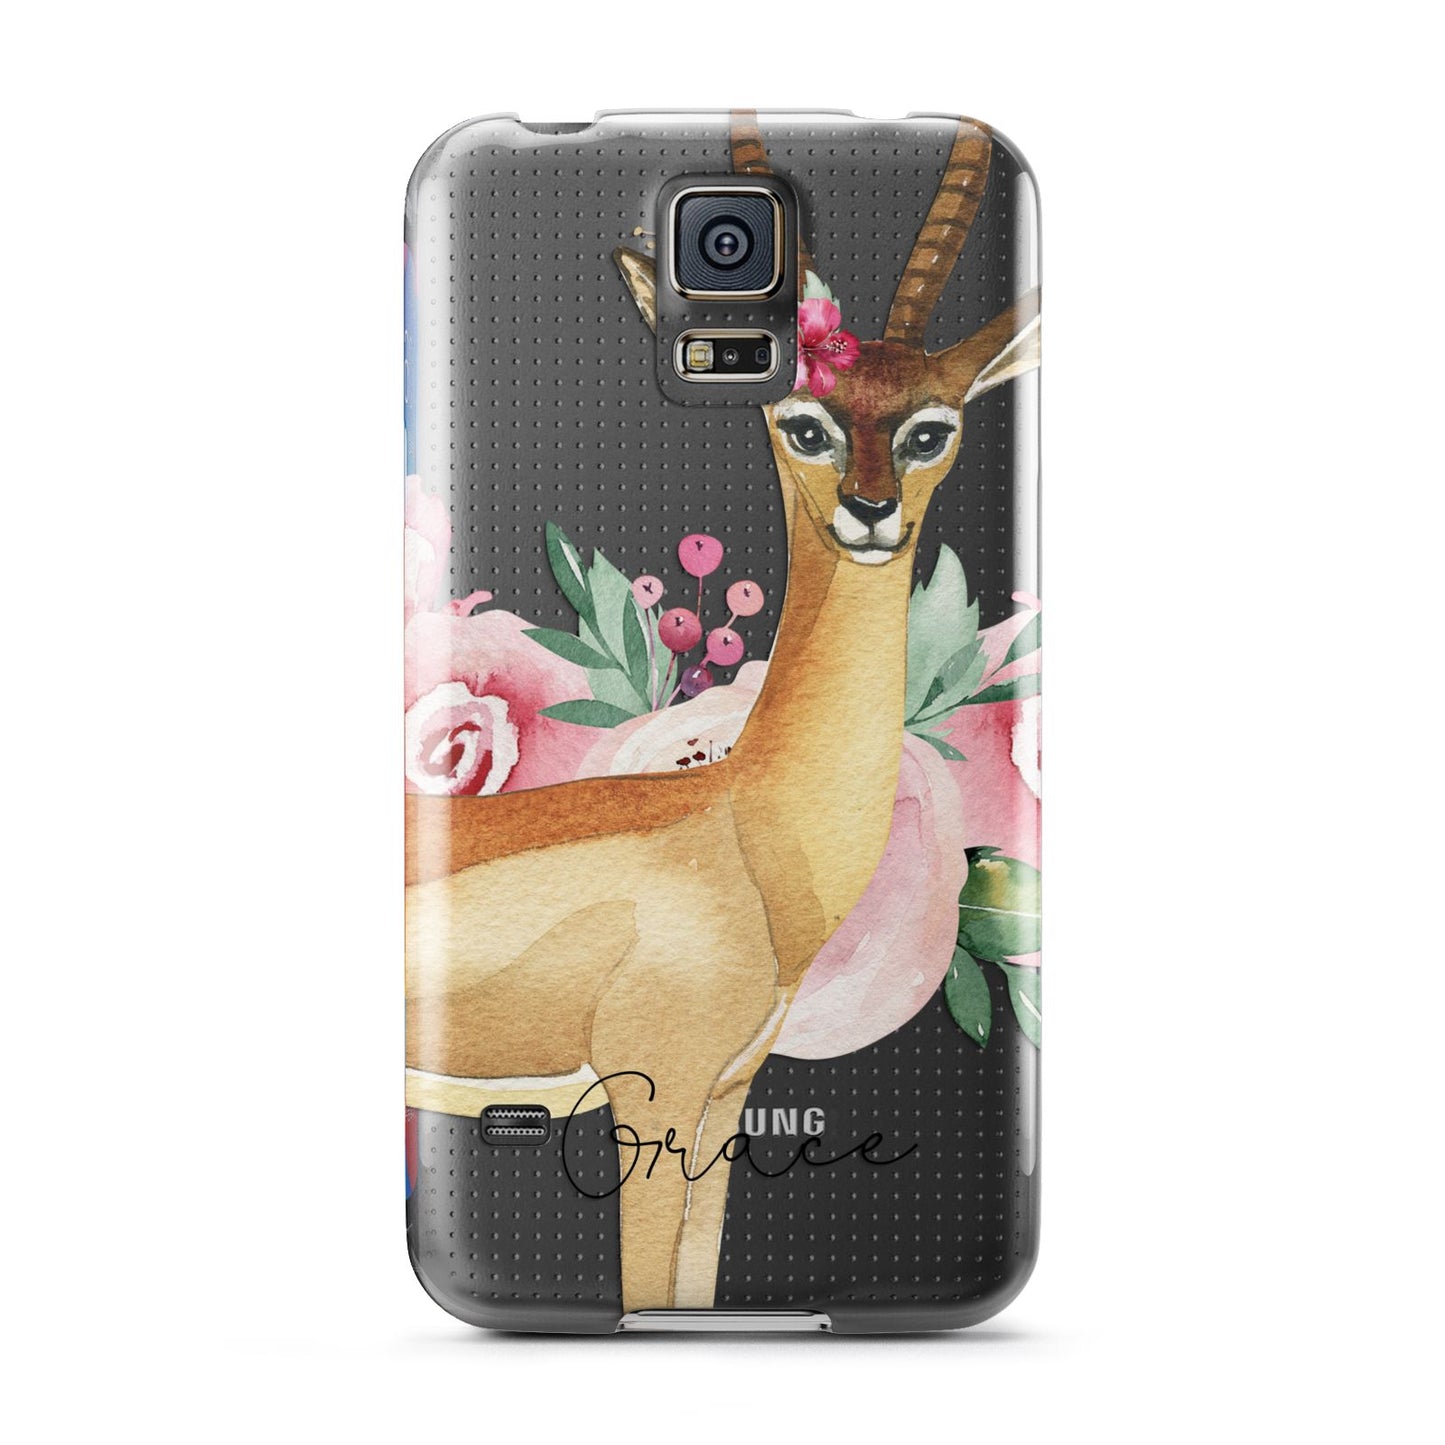 Personalised Gerenuk Samsung Galaxy S5 Case